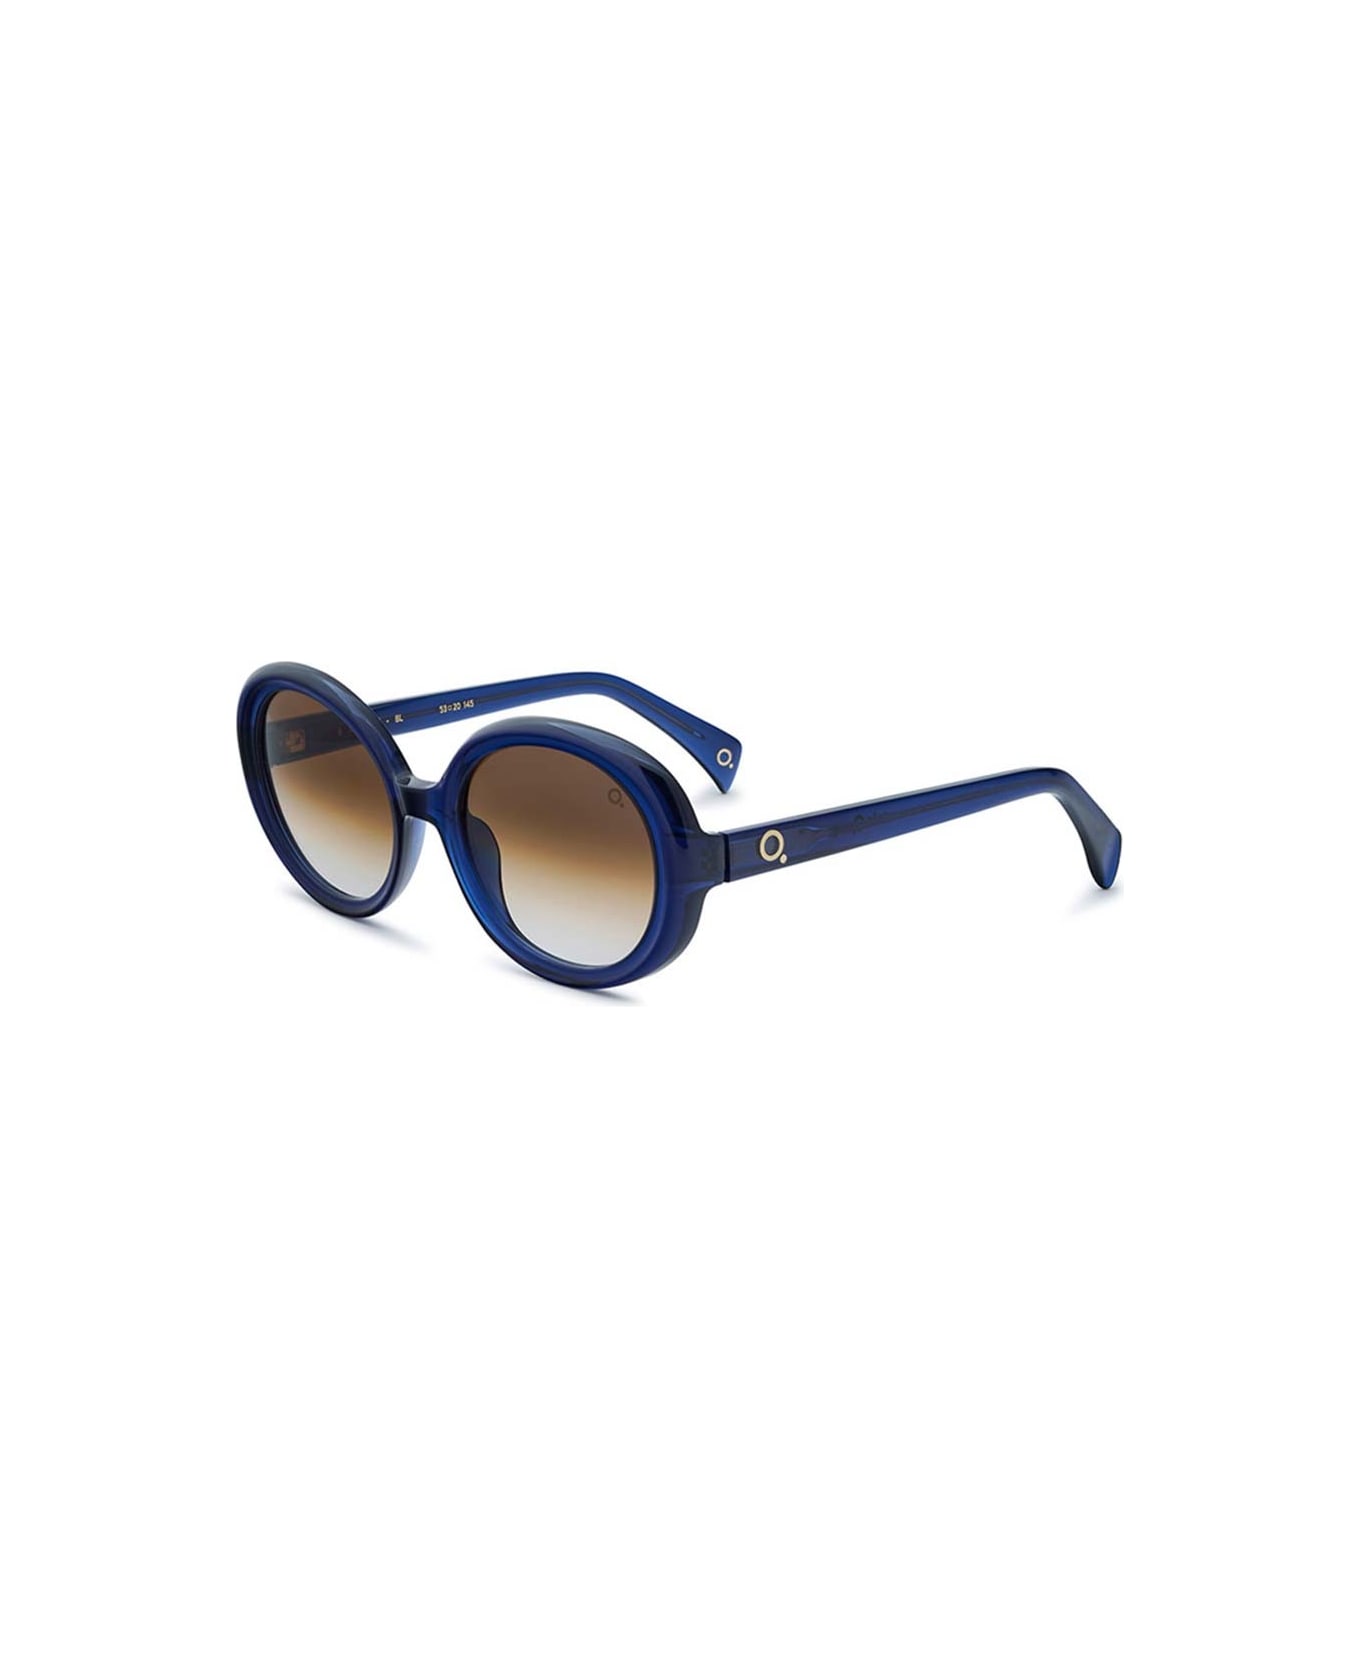 Etnia Barcelona Sunglasses - Blu/Marrone